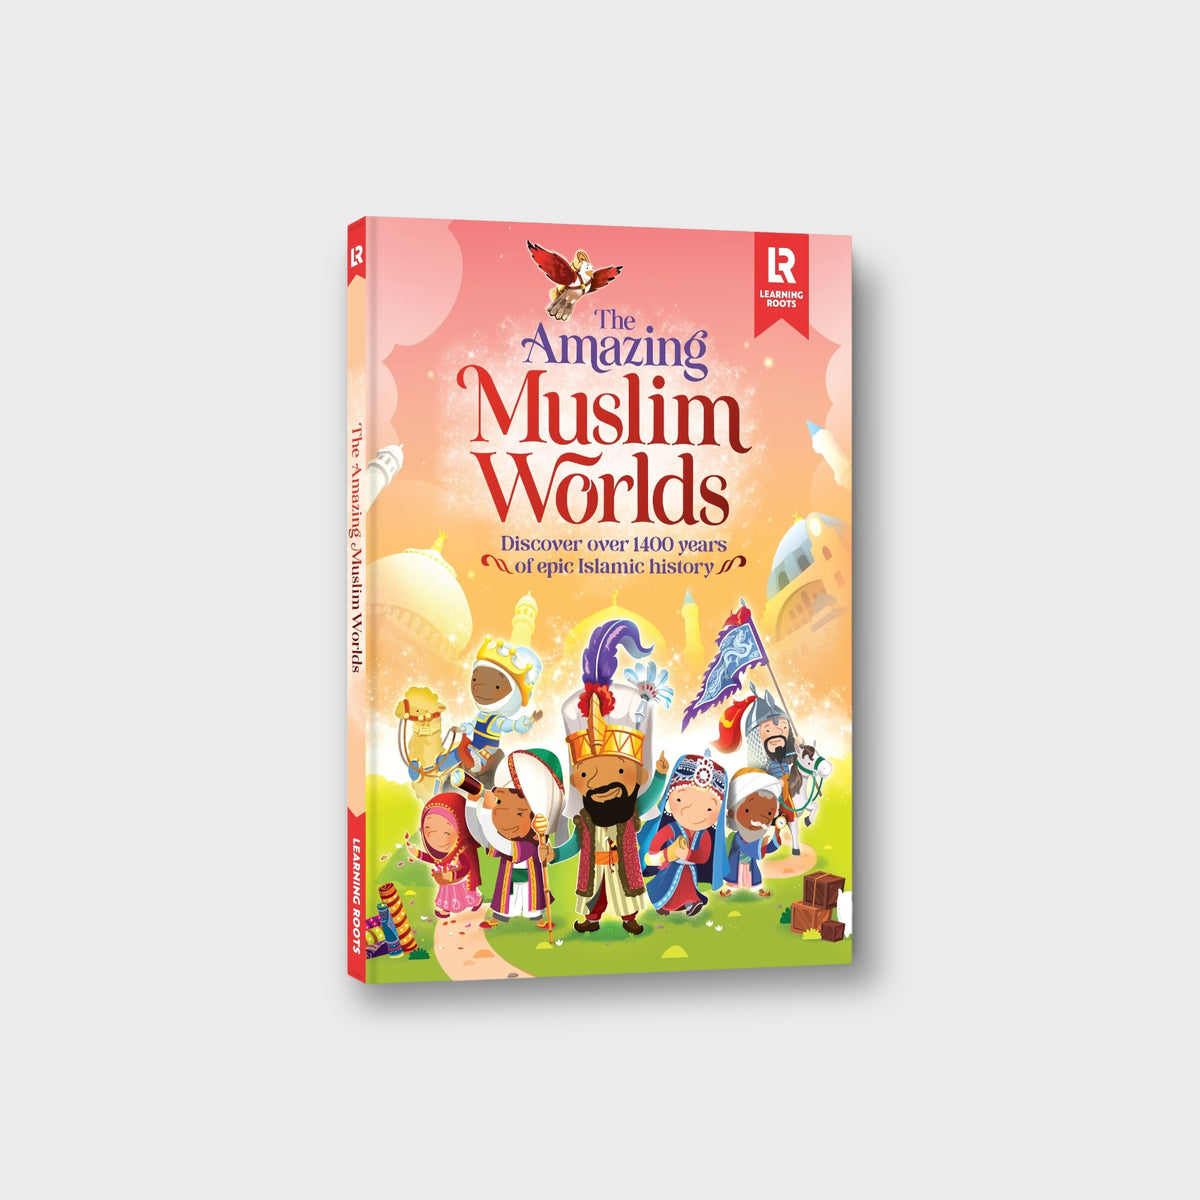 The Amazing Muslims Worlds